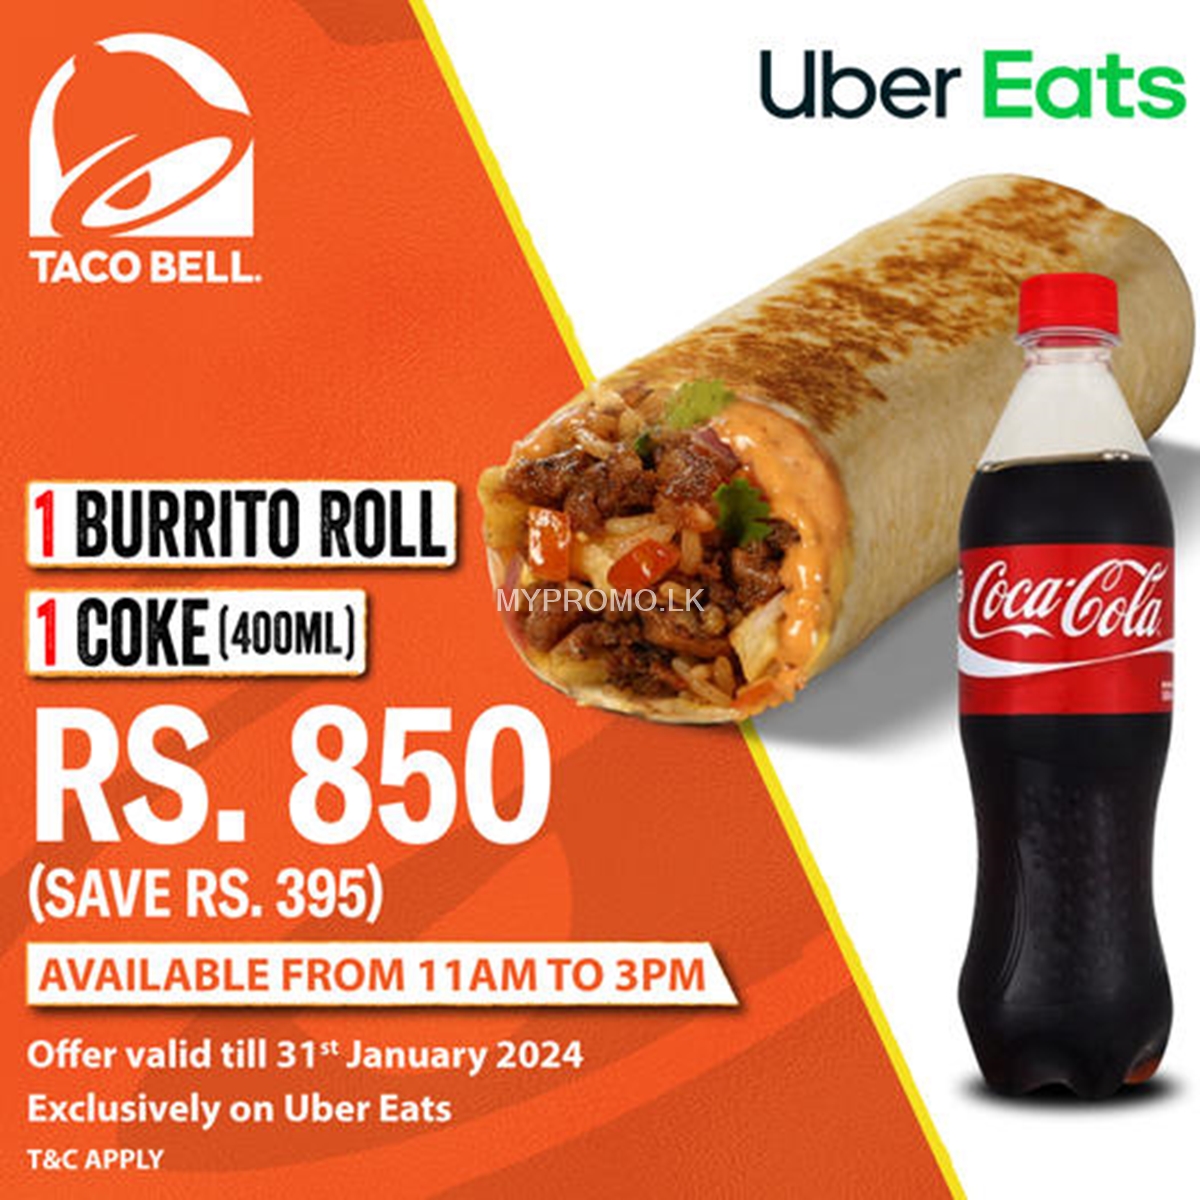 Get 1 Burrito Roll + 1 Coke (400ml) for just Rs. 850 on Uber Eats at TACO BELL Sri Lanka